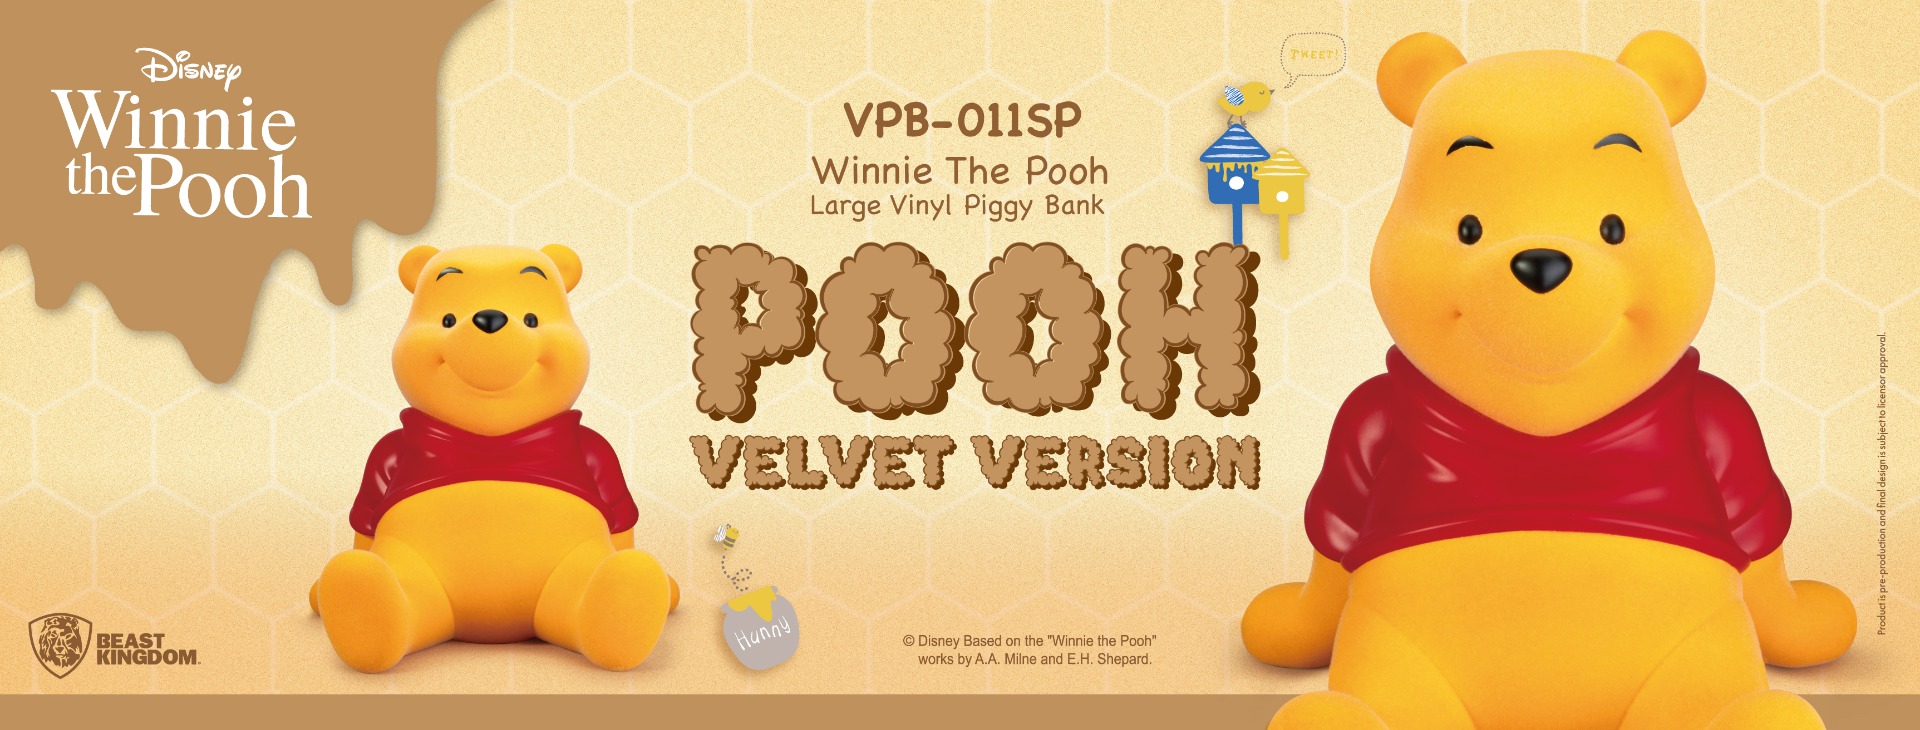 VPB-011SP Winnie The Pooh Large Vinyl Piggy Bank: Pooh-Velvet Version